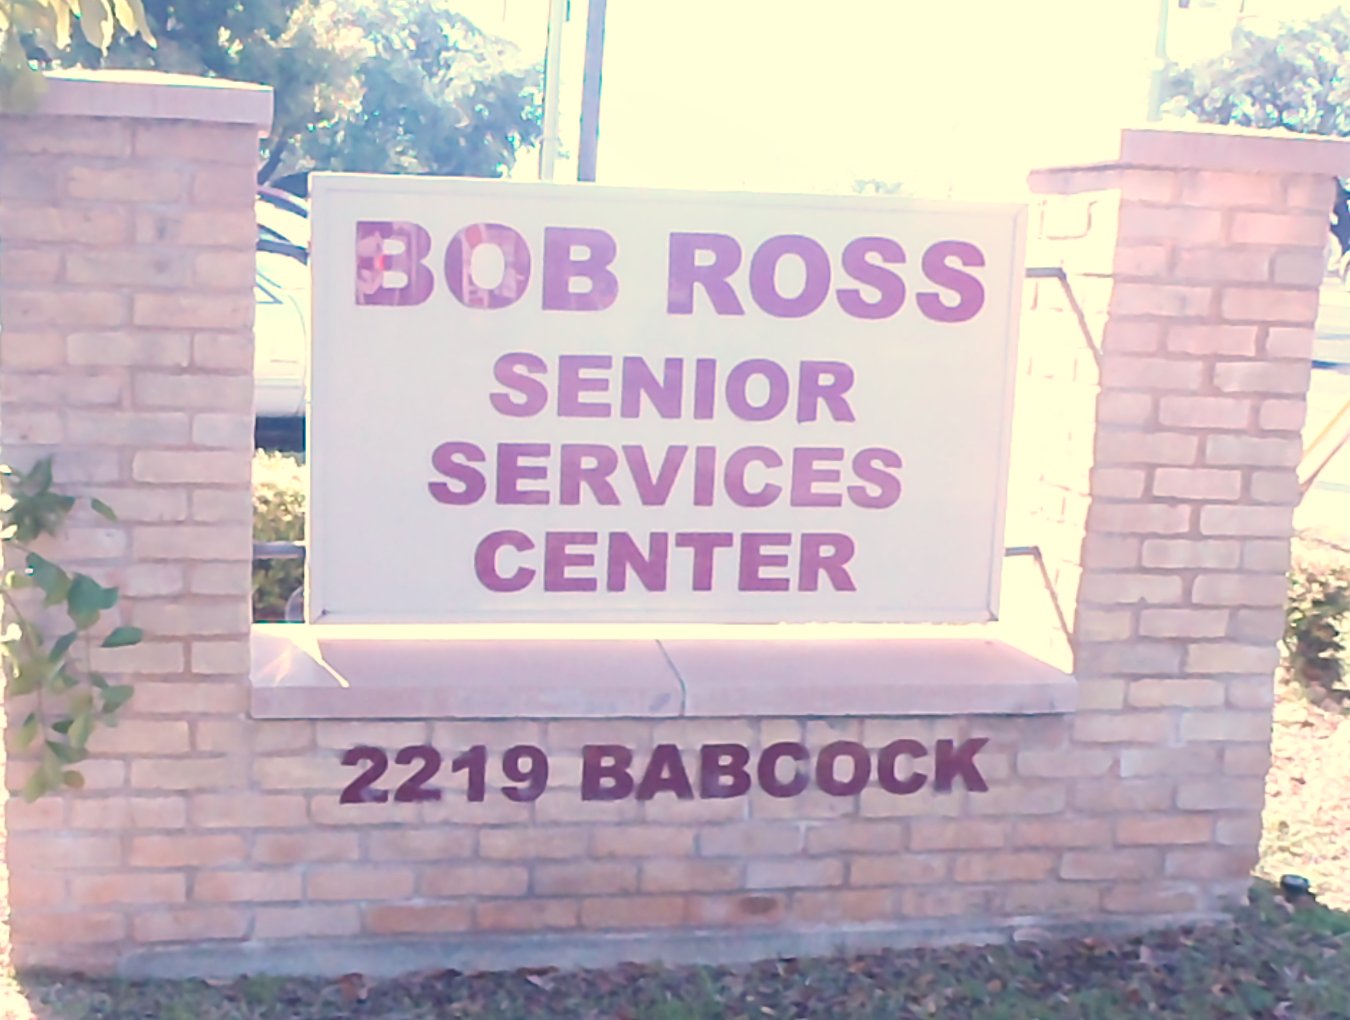 Becky's Blog lots of fun shtuff Online Tour of Bob Ross Senior